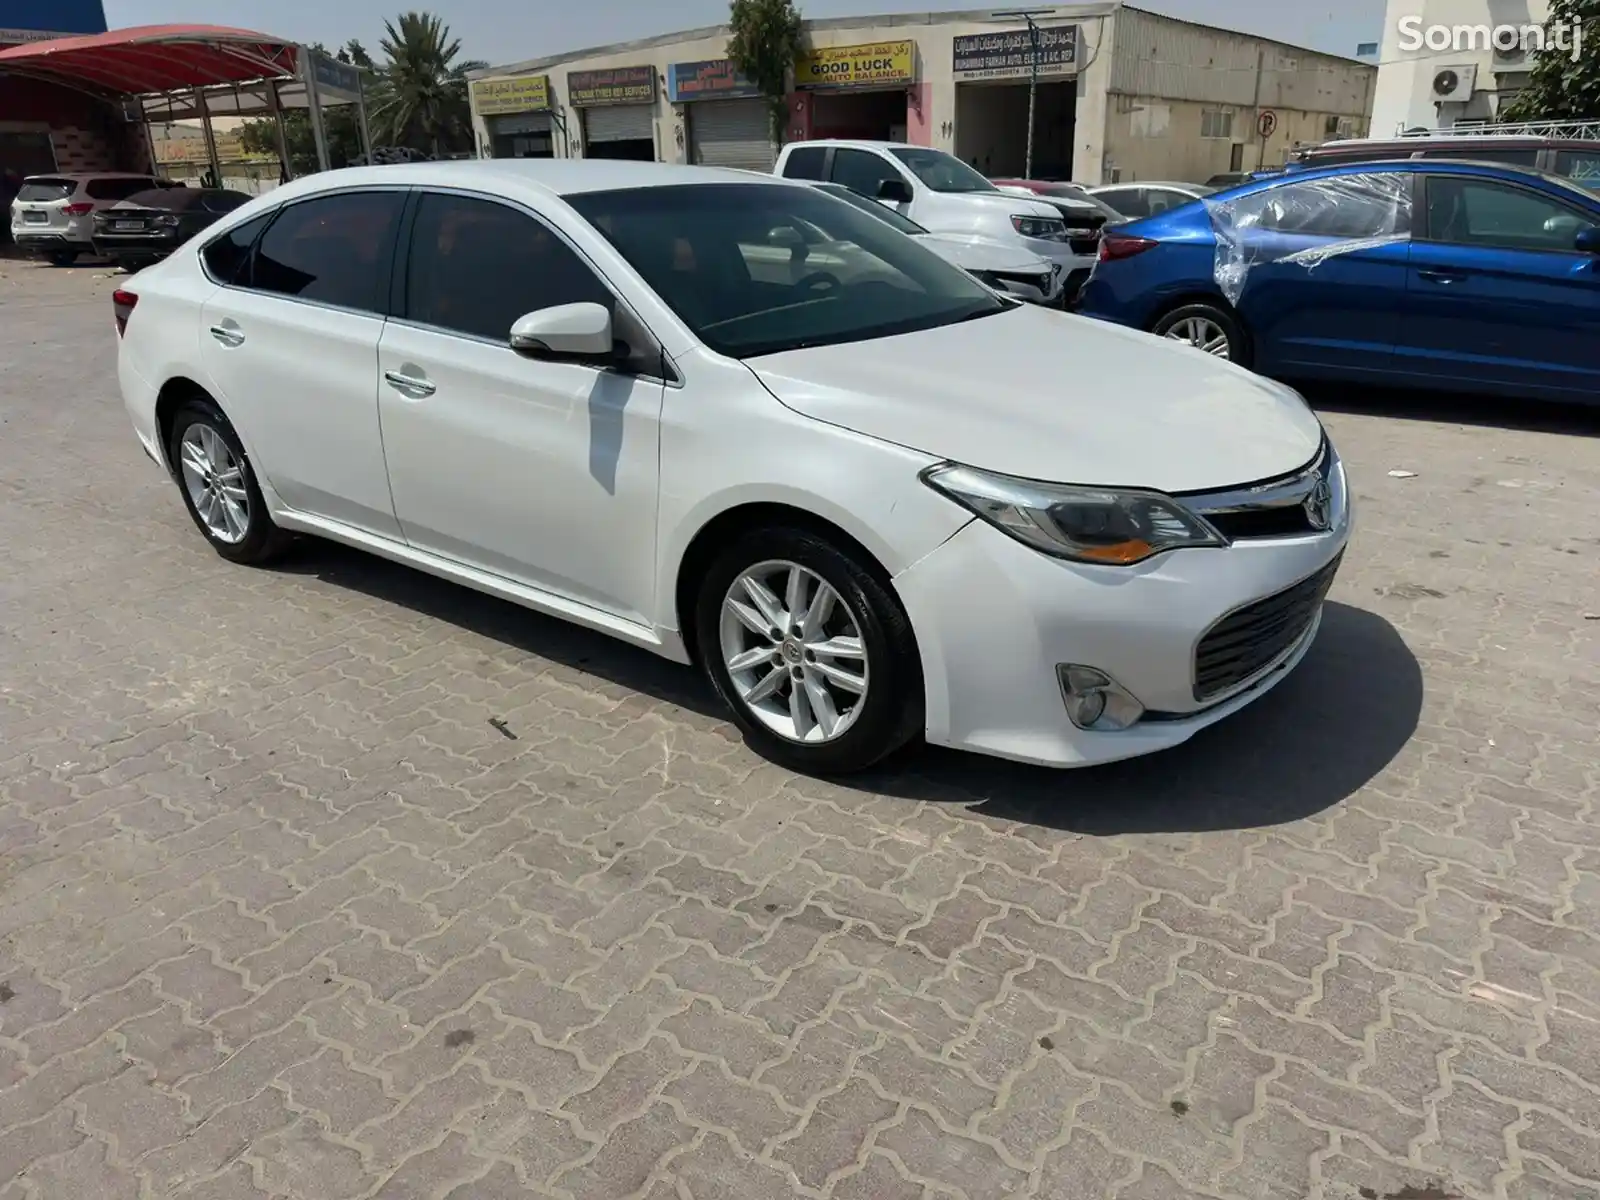 Toyota Avalon, 2015-1